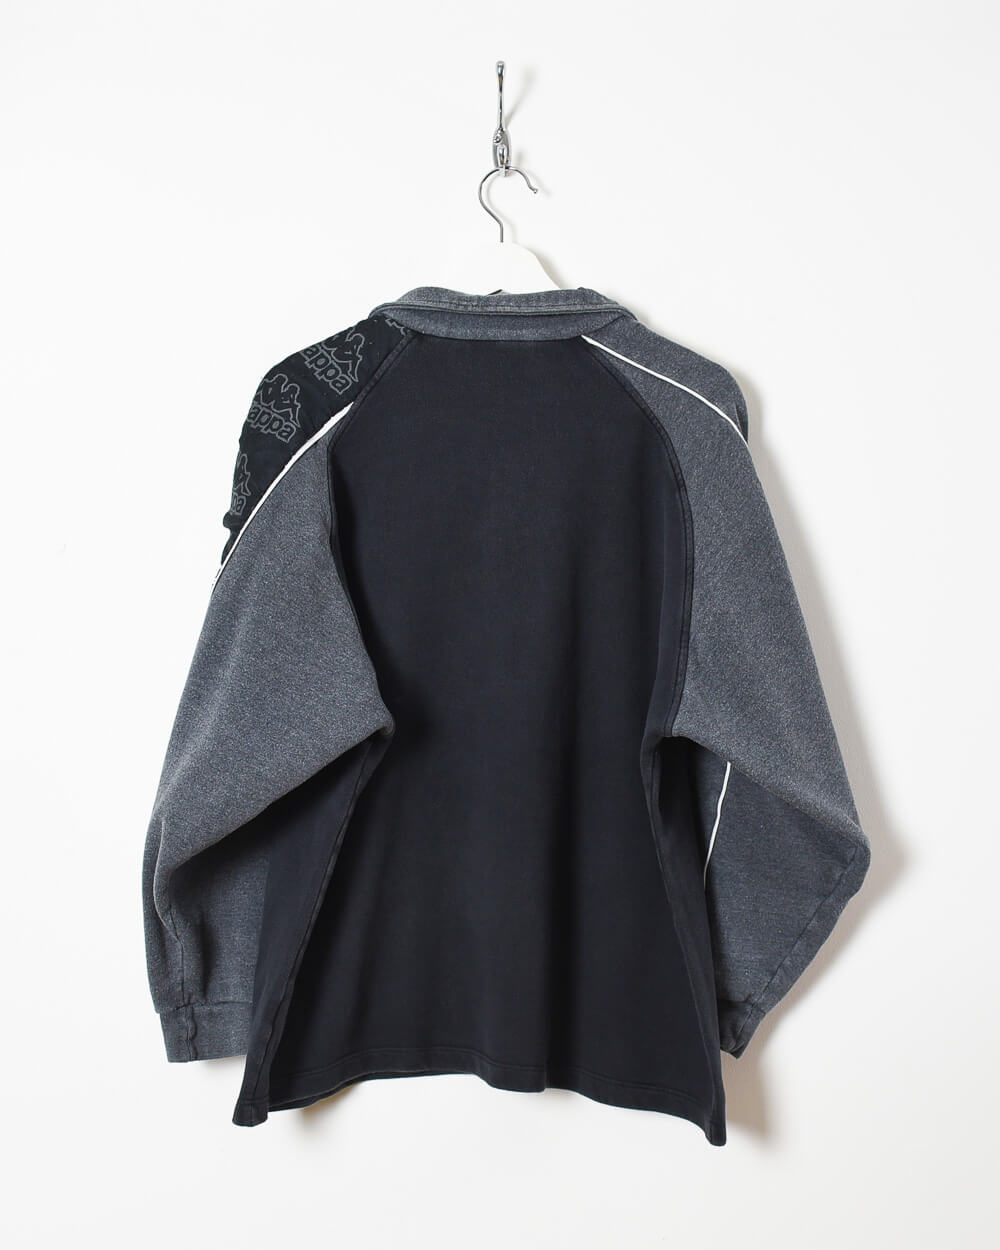 Black Kappa 1/4 Zip Sweatshirt - Medium